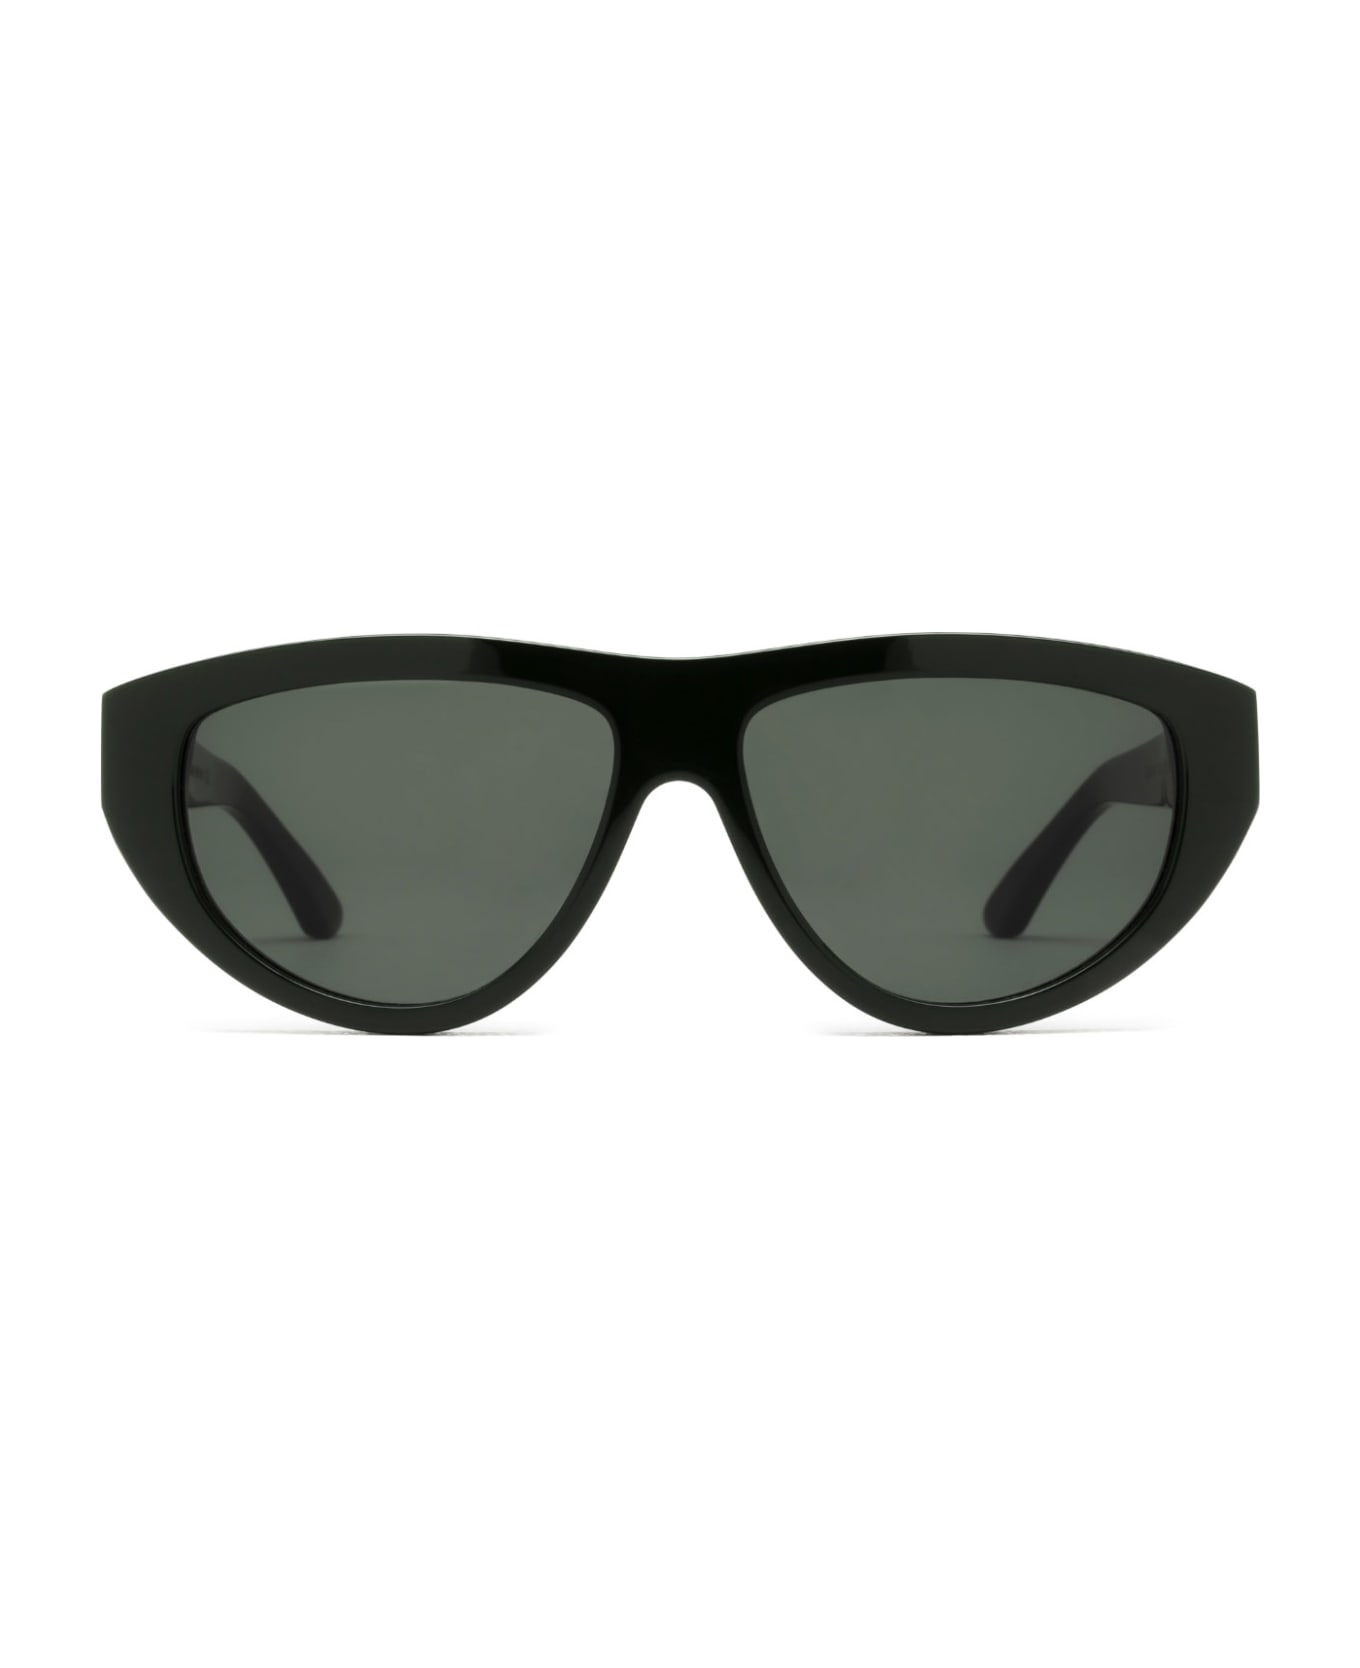 Huma Viko Green Sunglasses - Green サングラス